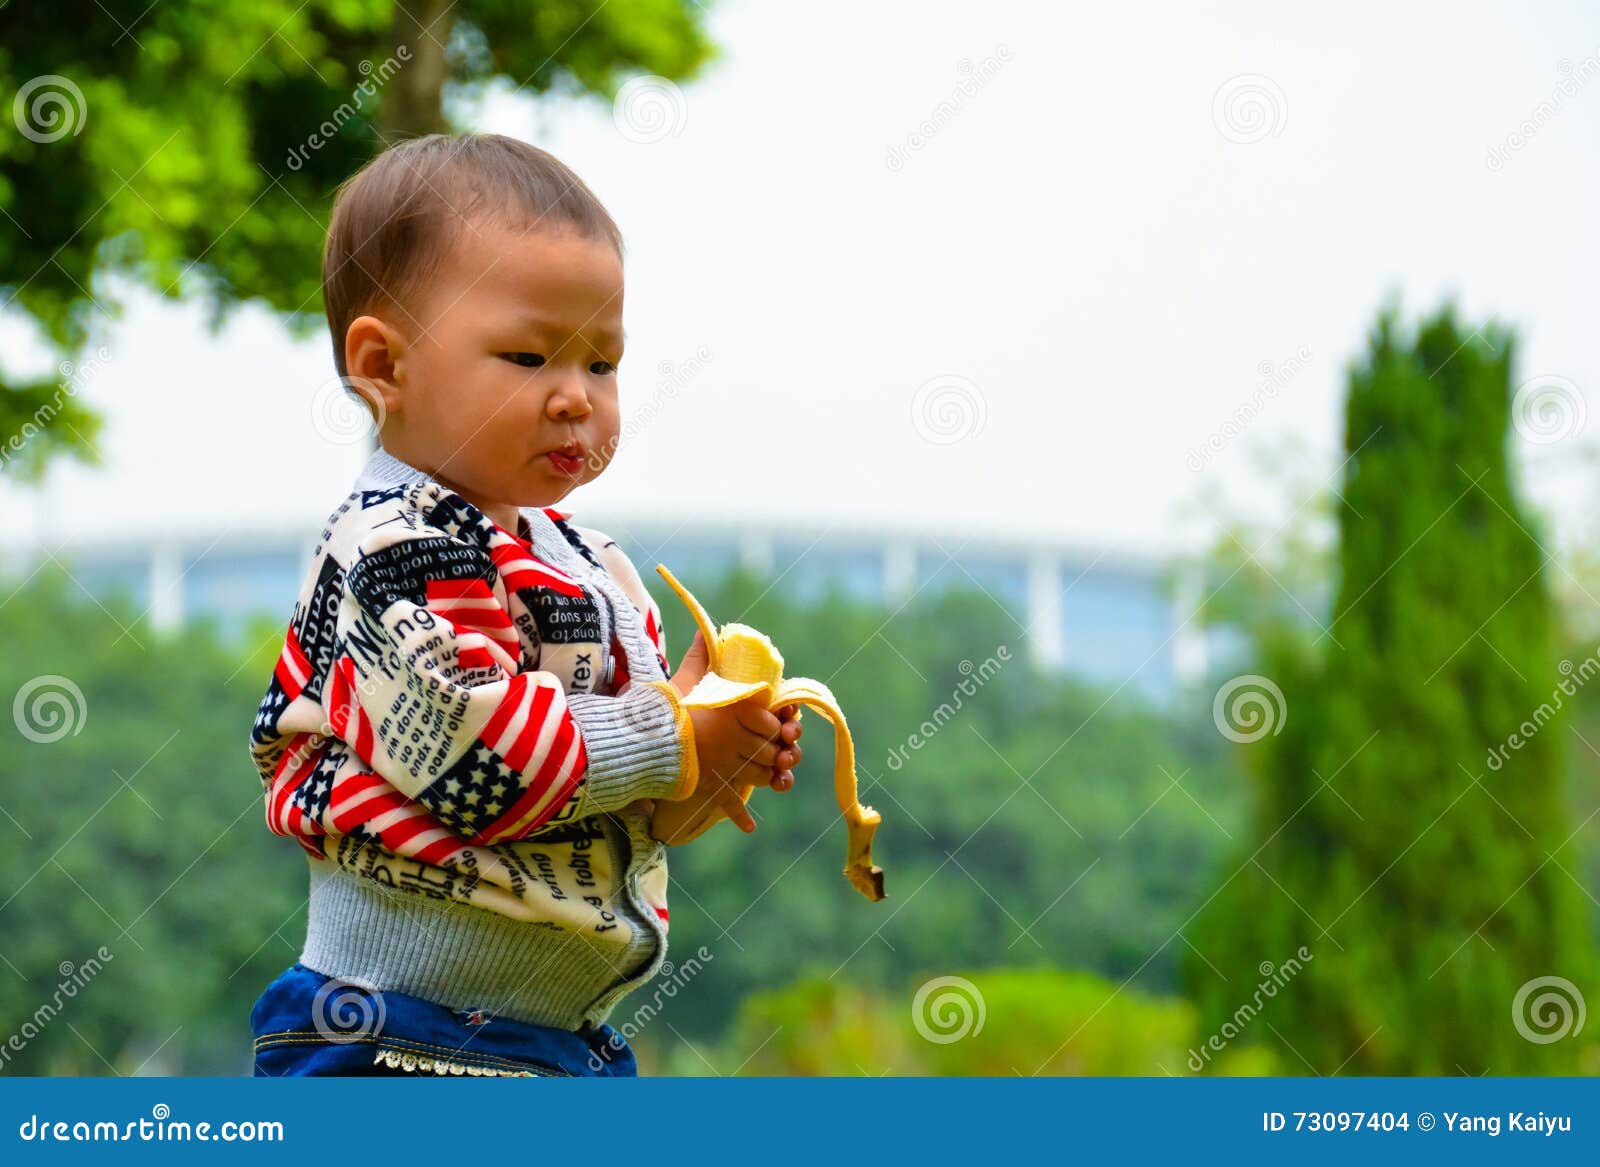 Baby eat fruit stock photo. Image of chinese, hunger - 73097404